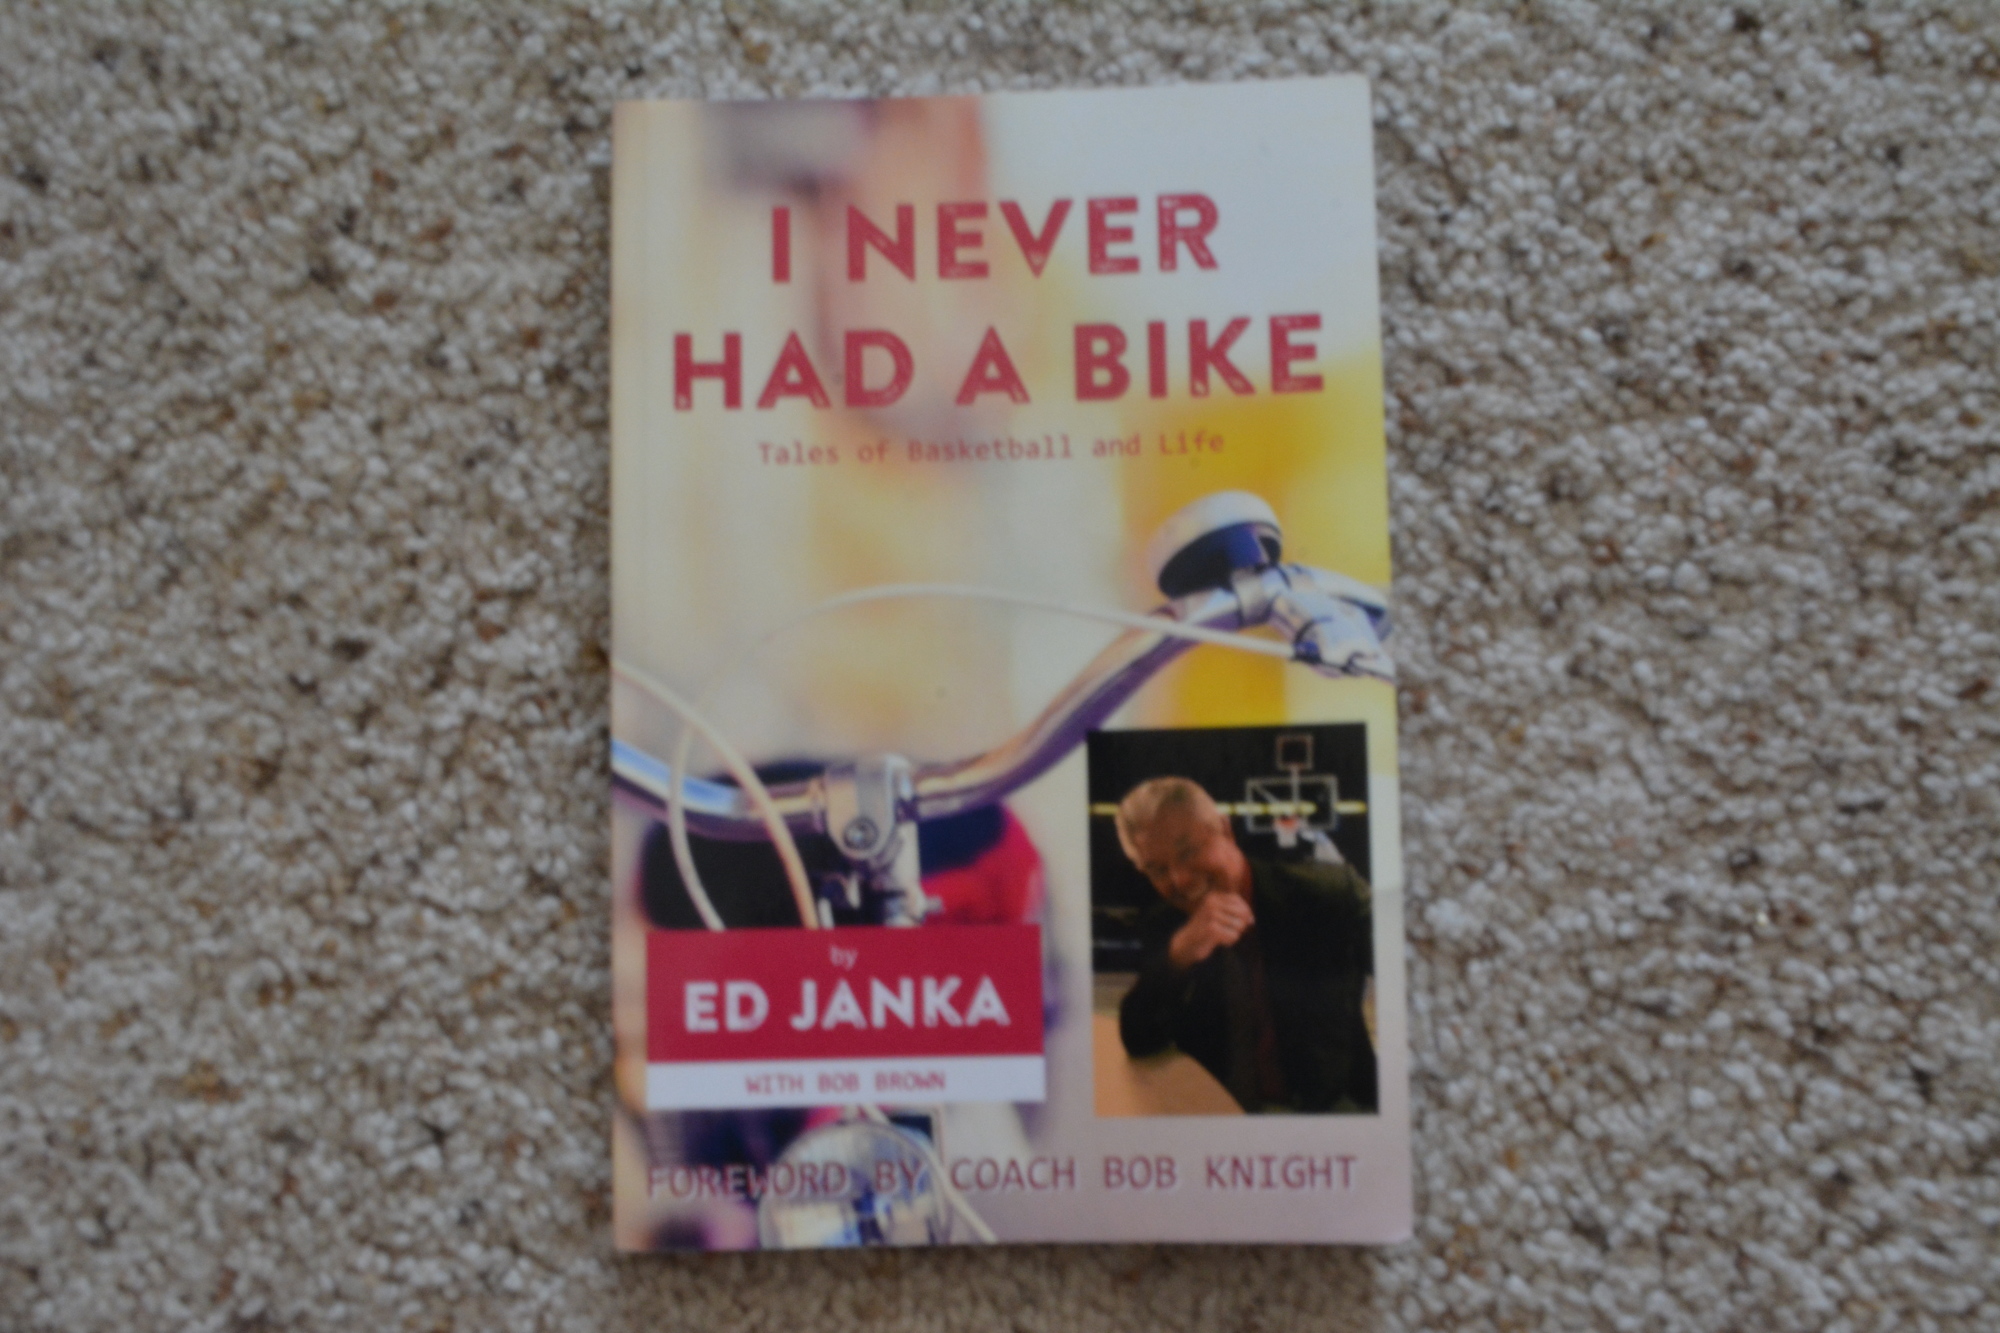 A copy of Ed Janka's book, 